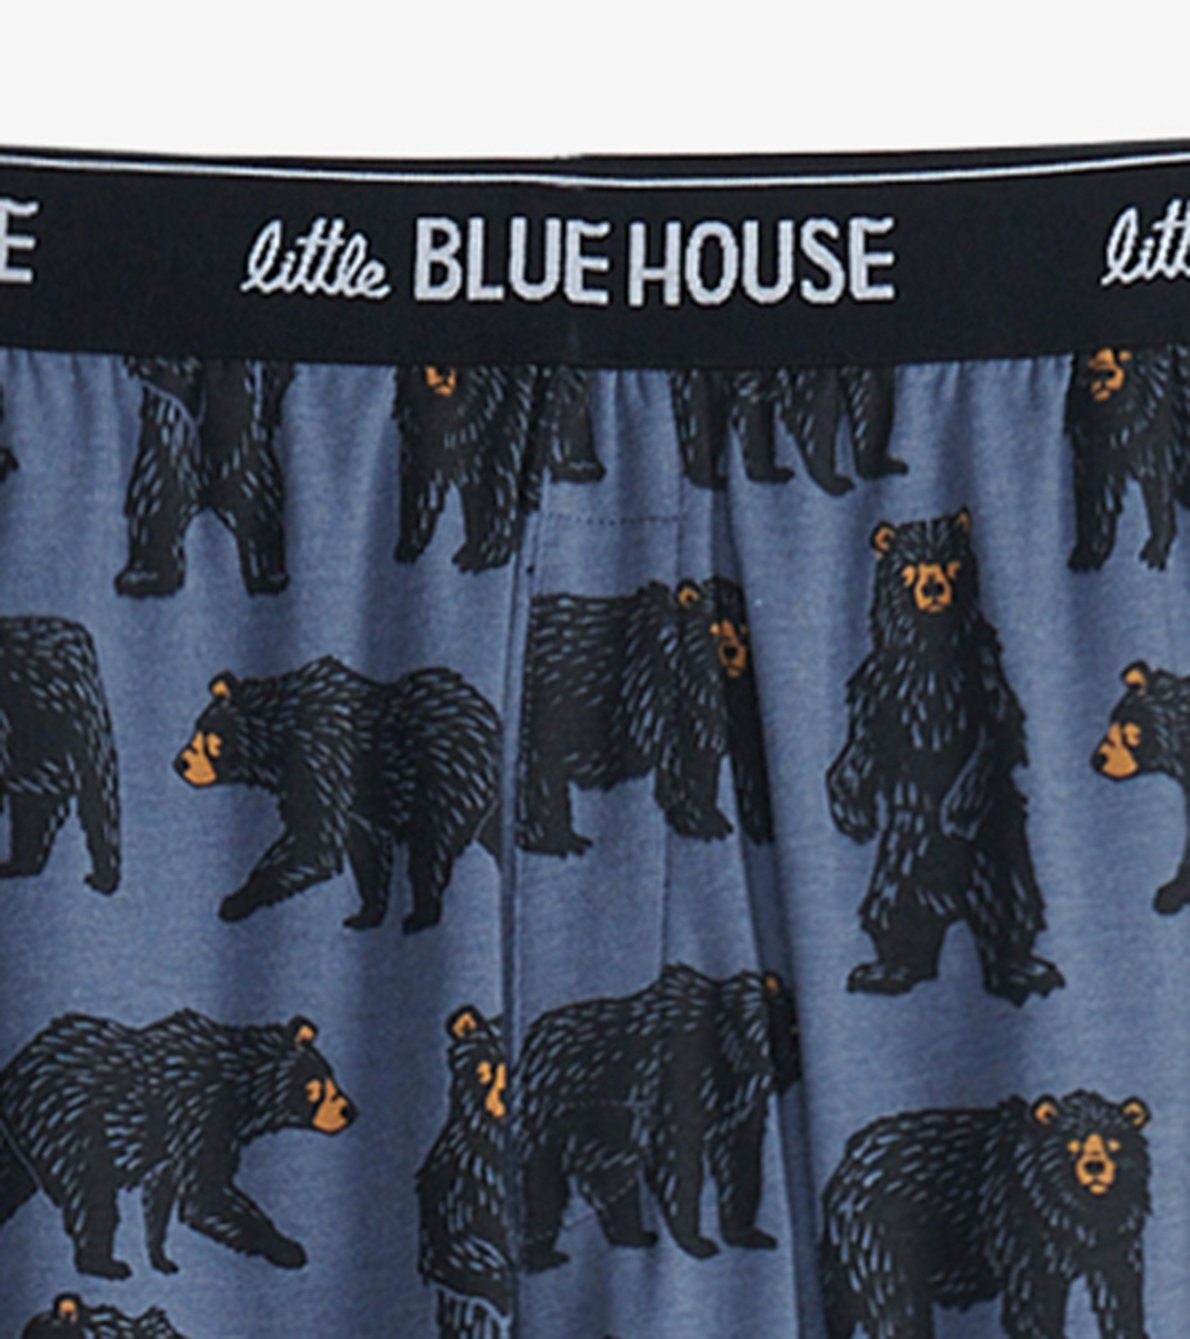 View larger image of Wild Bears Men's Jersey Pajama Pants